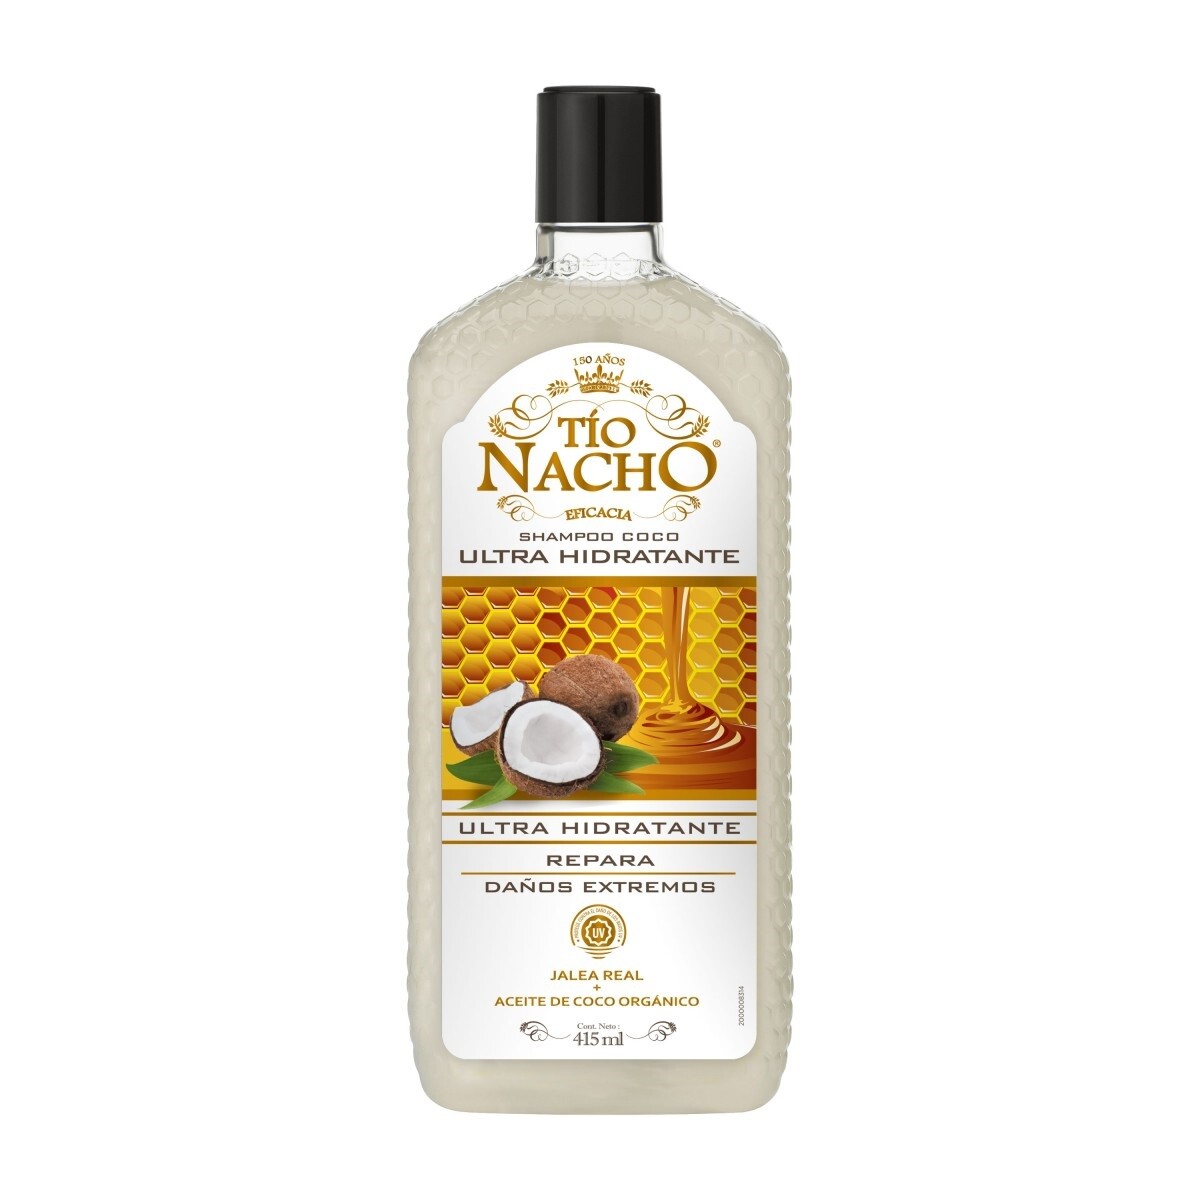 Shampoo Tio Nacho Ultrahidratante 415 Ml. 